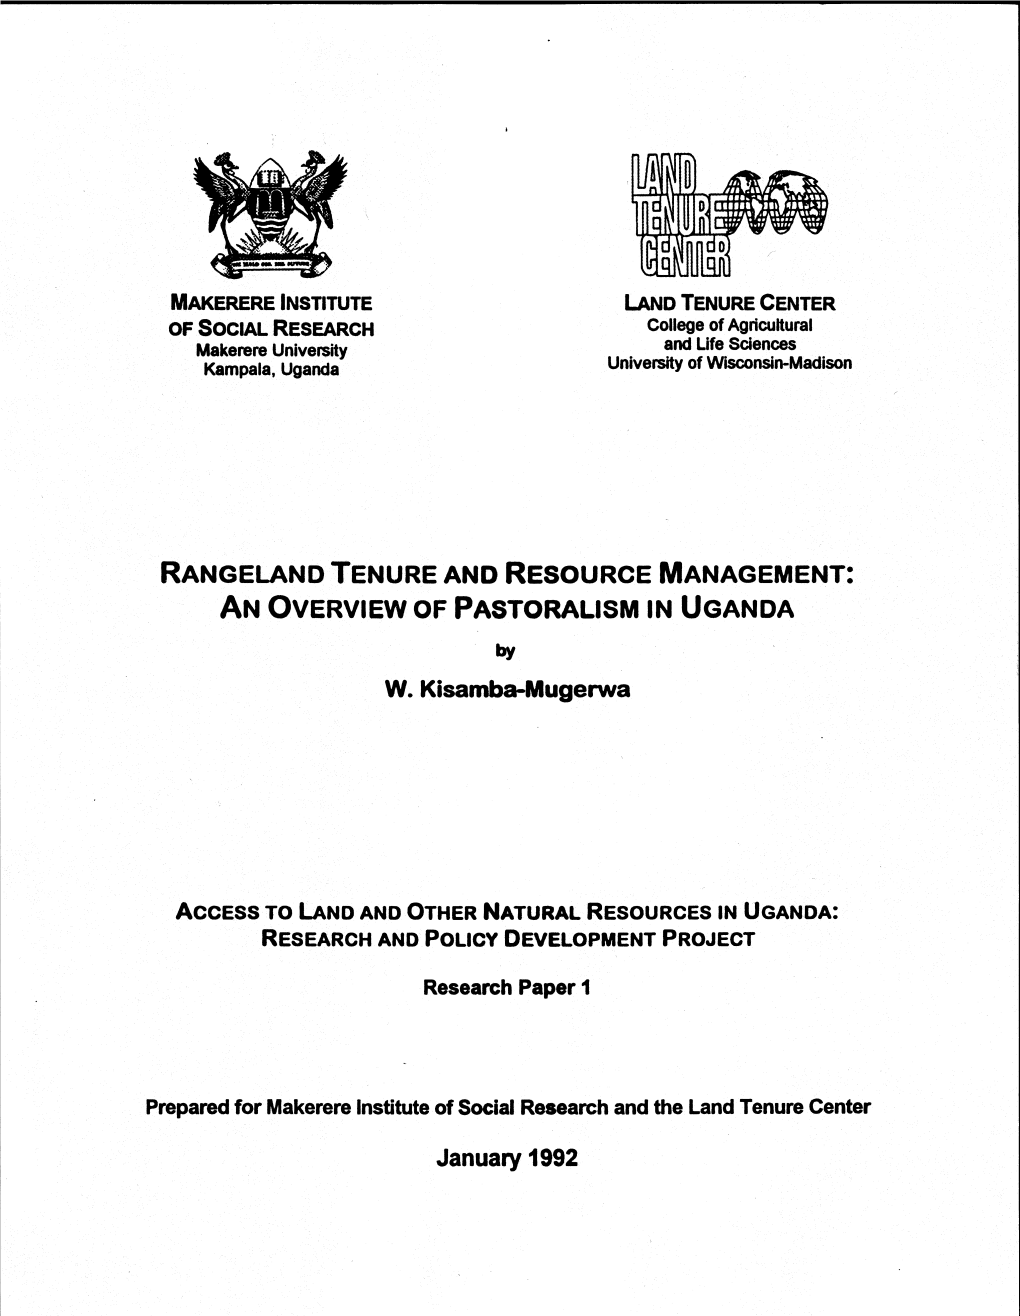 Rangeland Tenure and Resource Management: an Overview of Pastoralism in Uganda